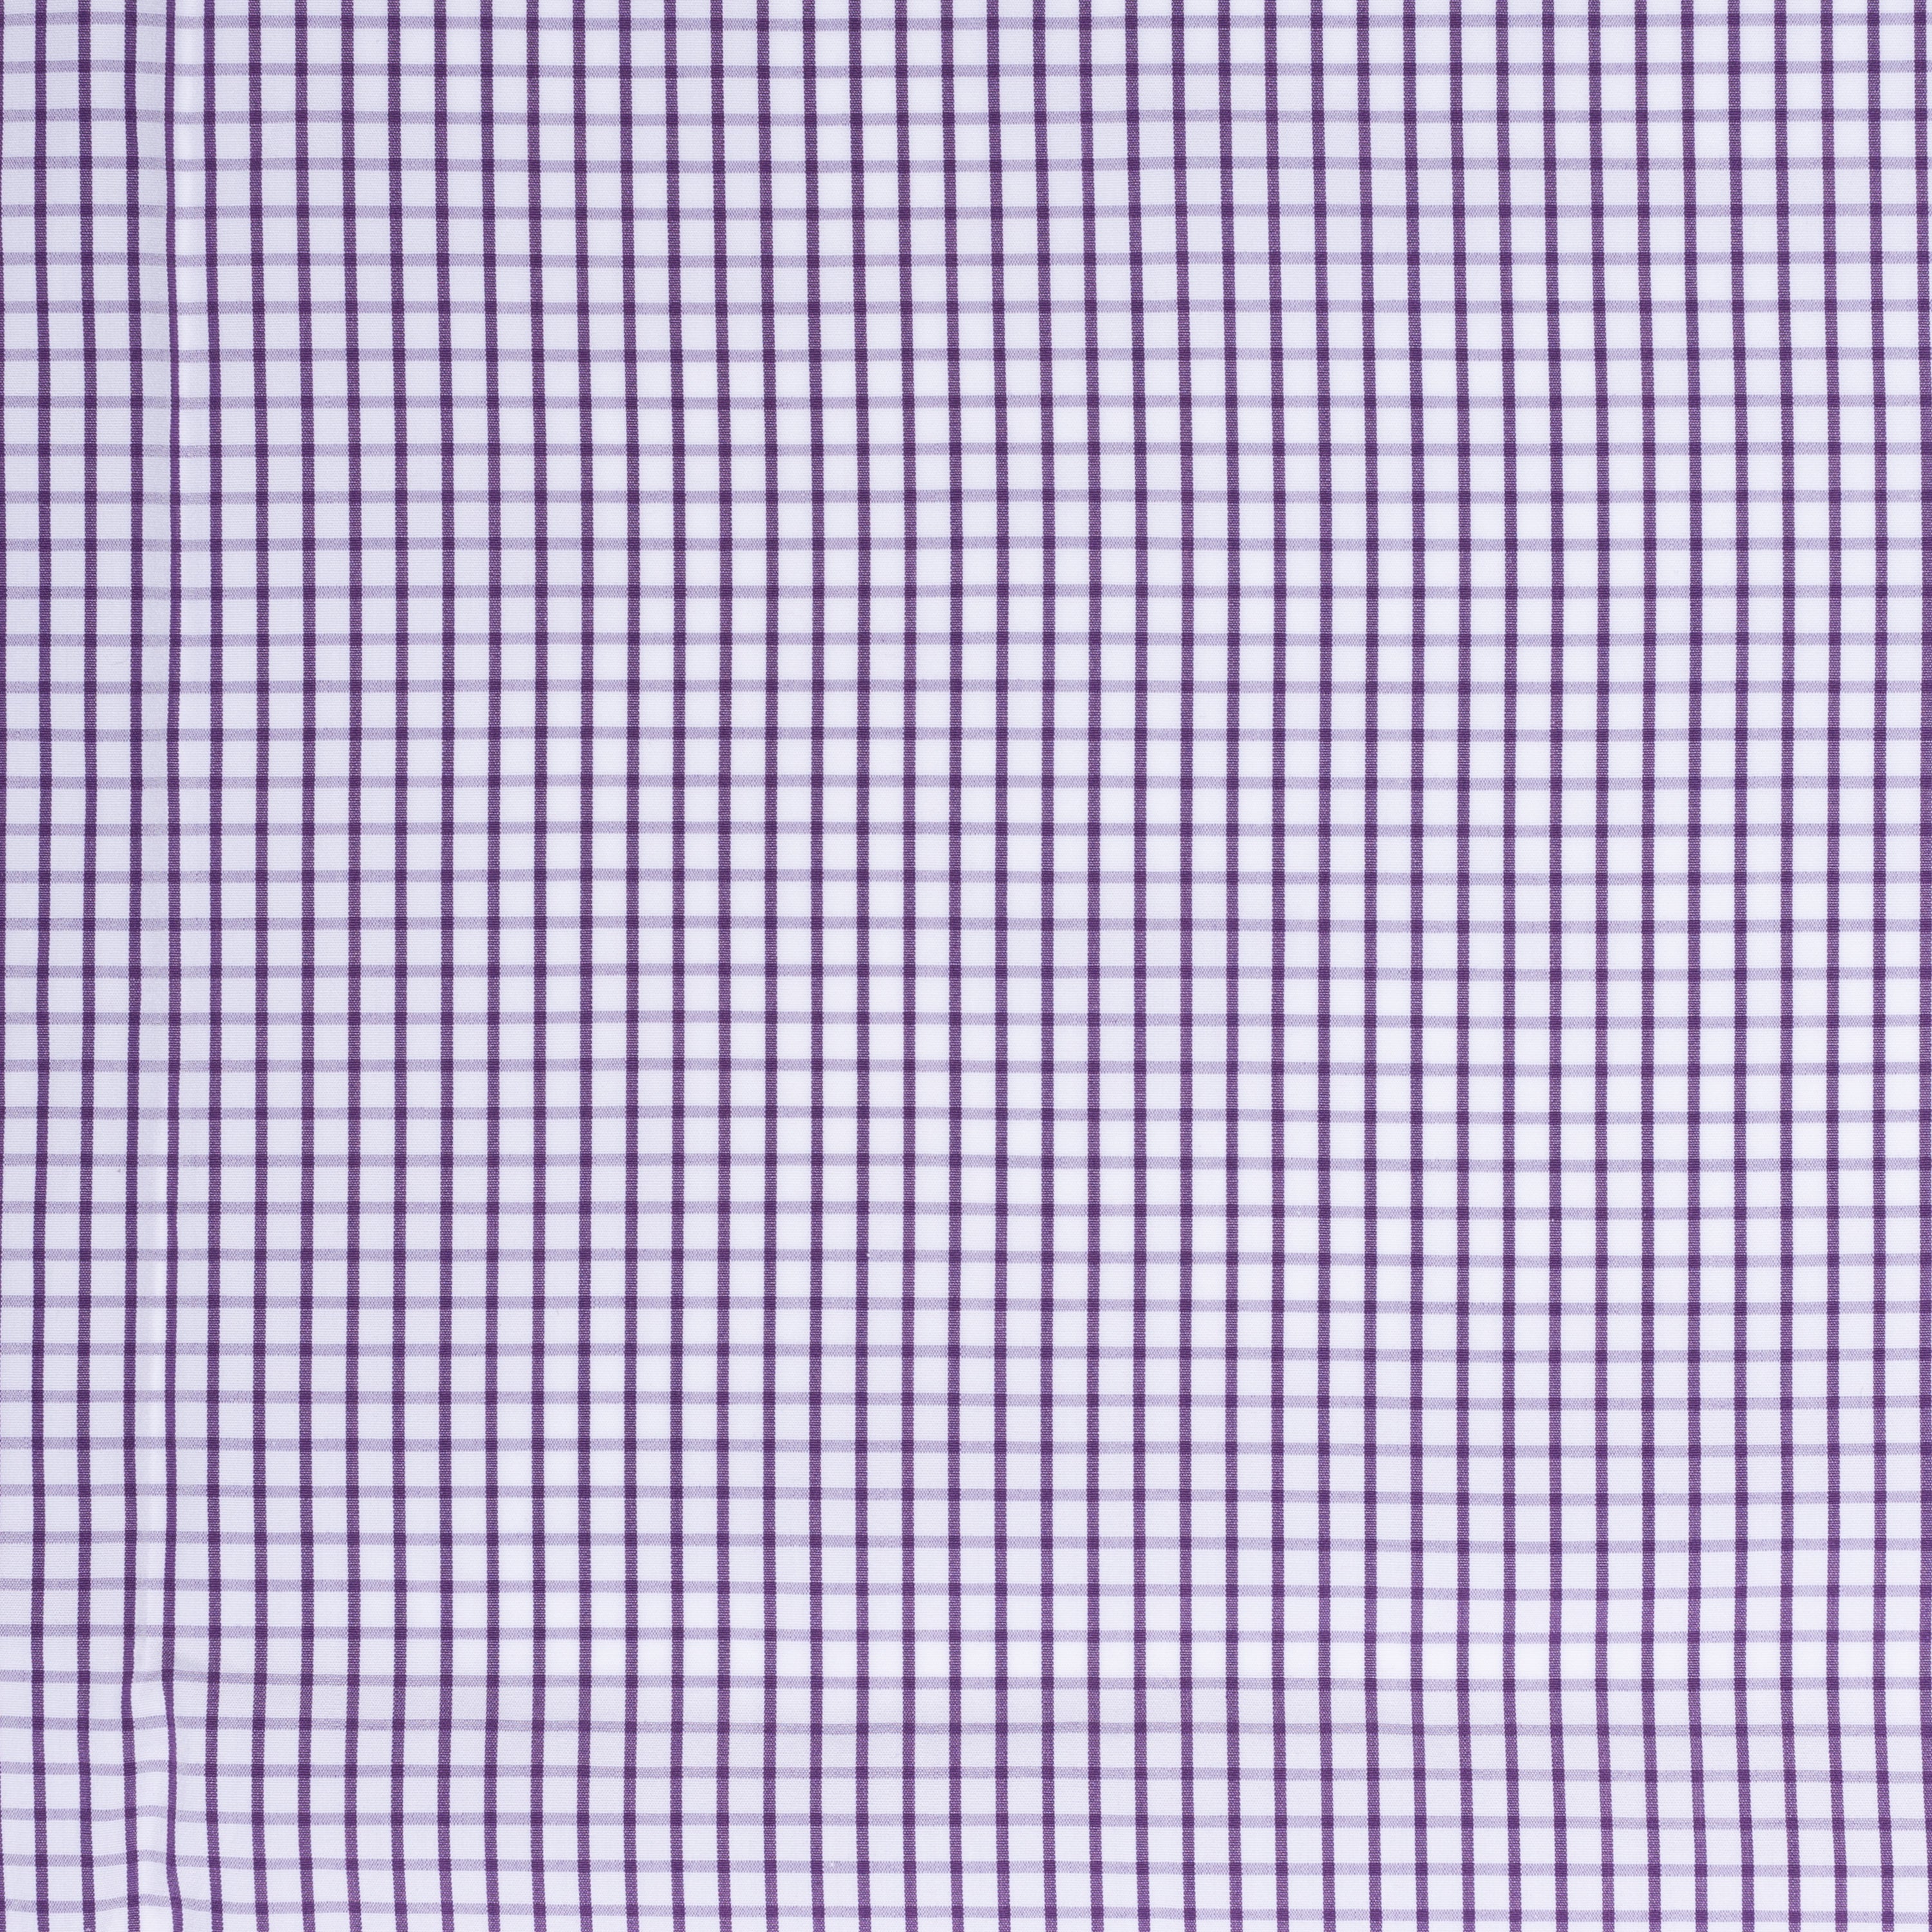 BESPOKE ATHENS Handmade Purple Plaid Cotton Dress Shirt EU 41 NEW US 16 BESPOKE ATHENS